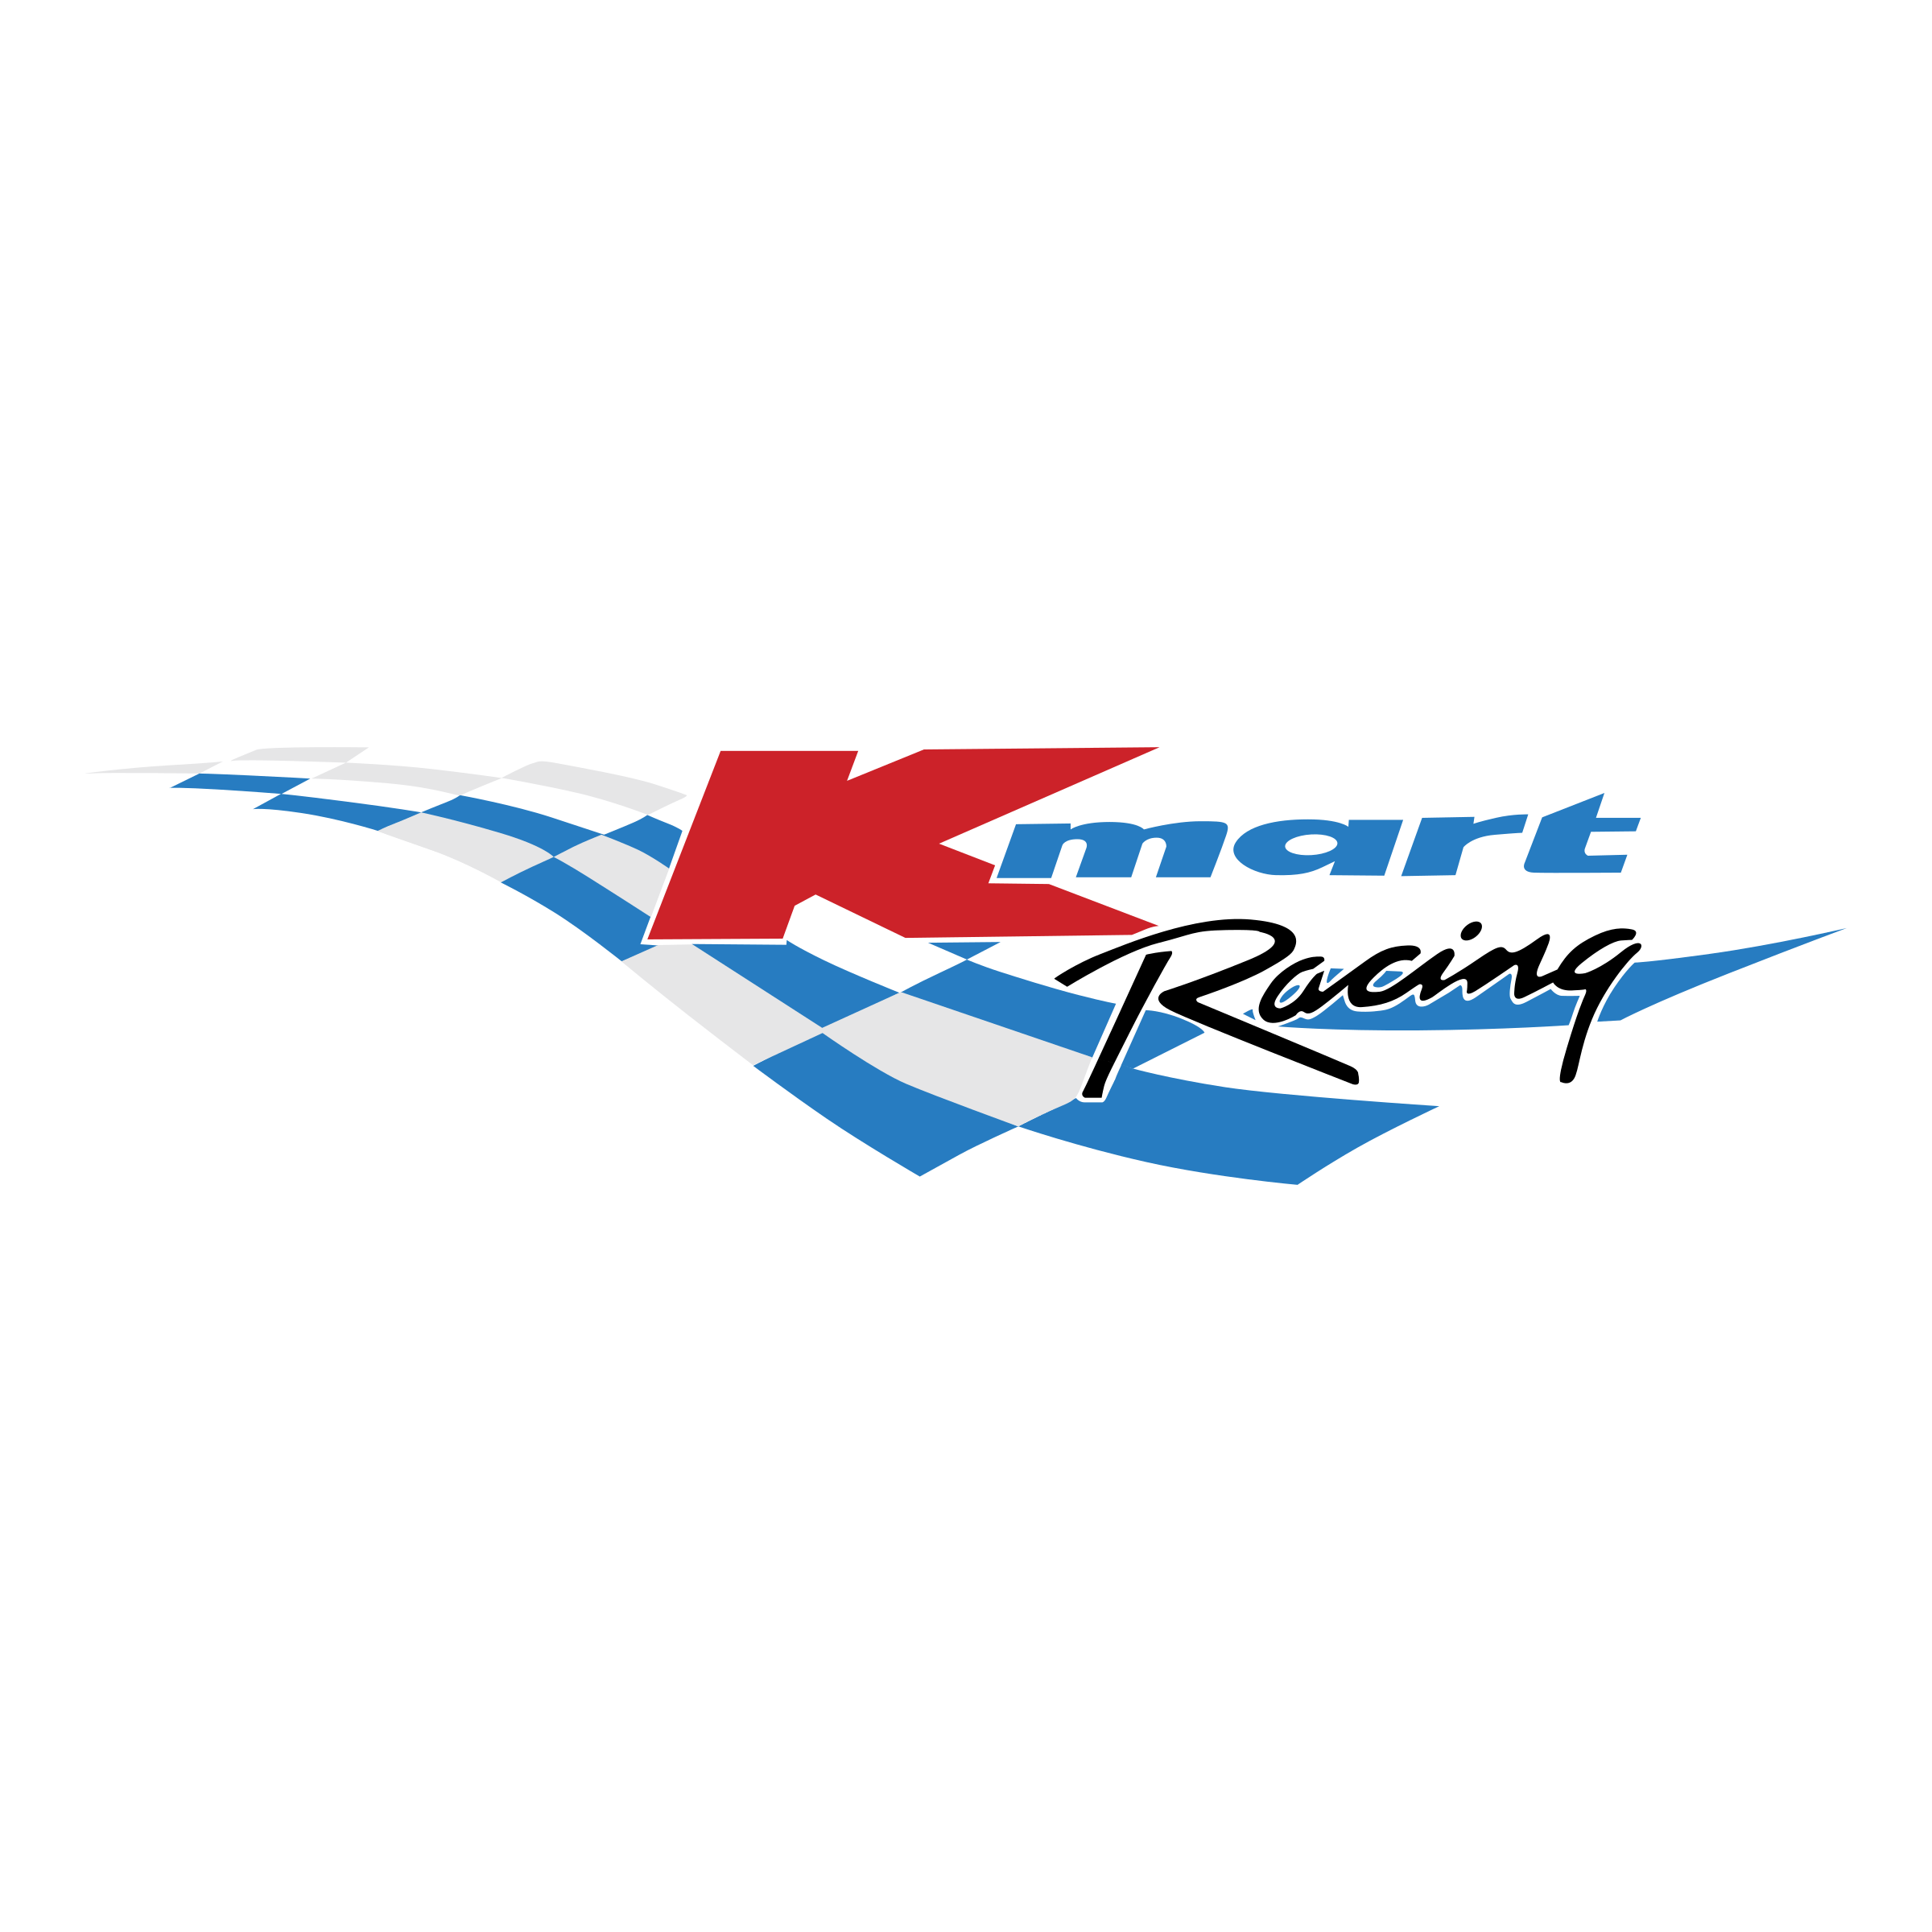 Kmary Logo - Kmart Racing Logo PNG Transparent & SVG Vector